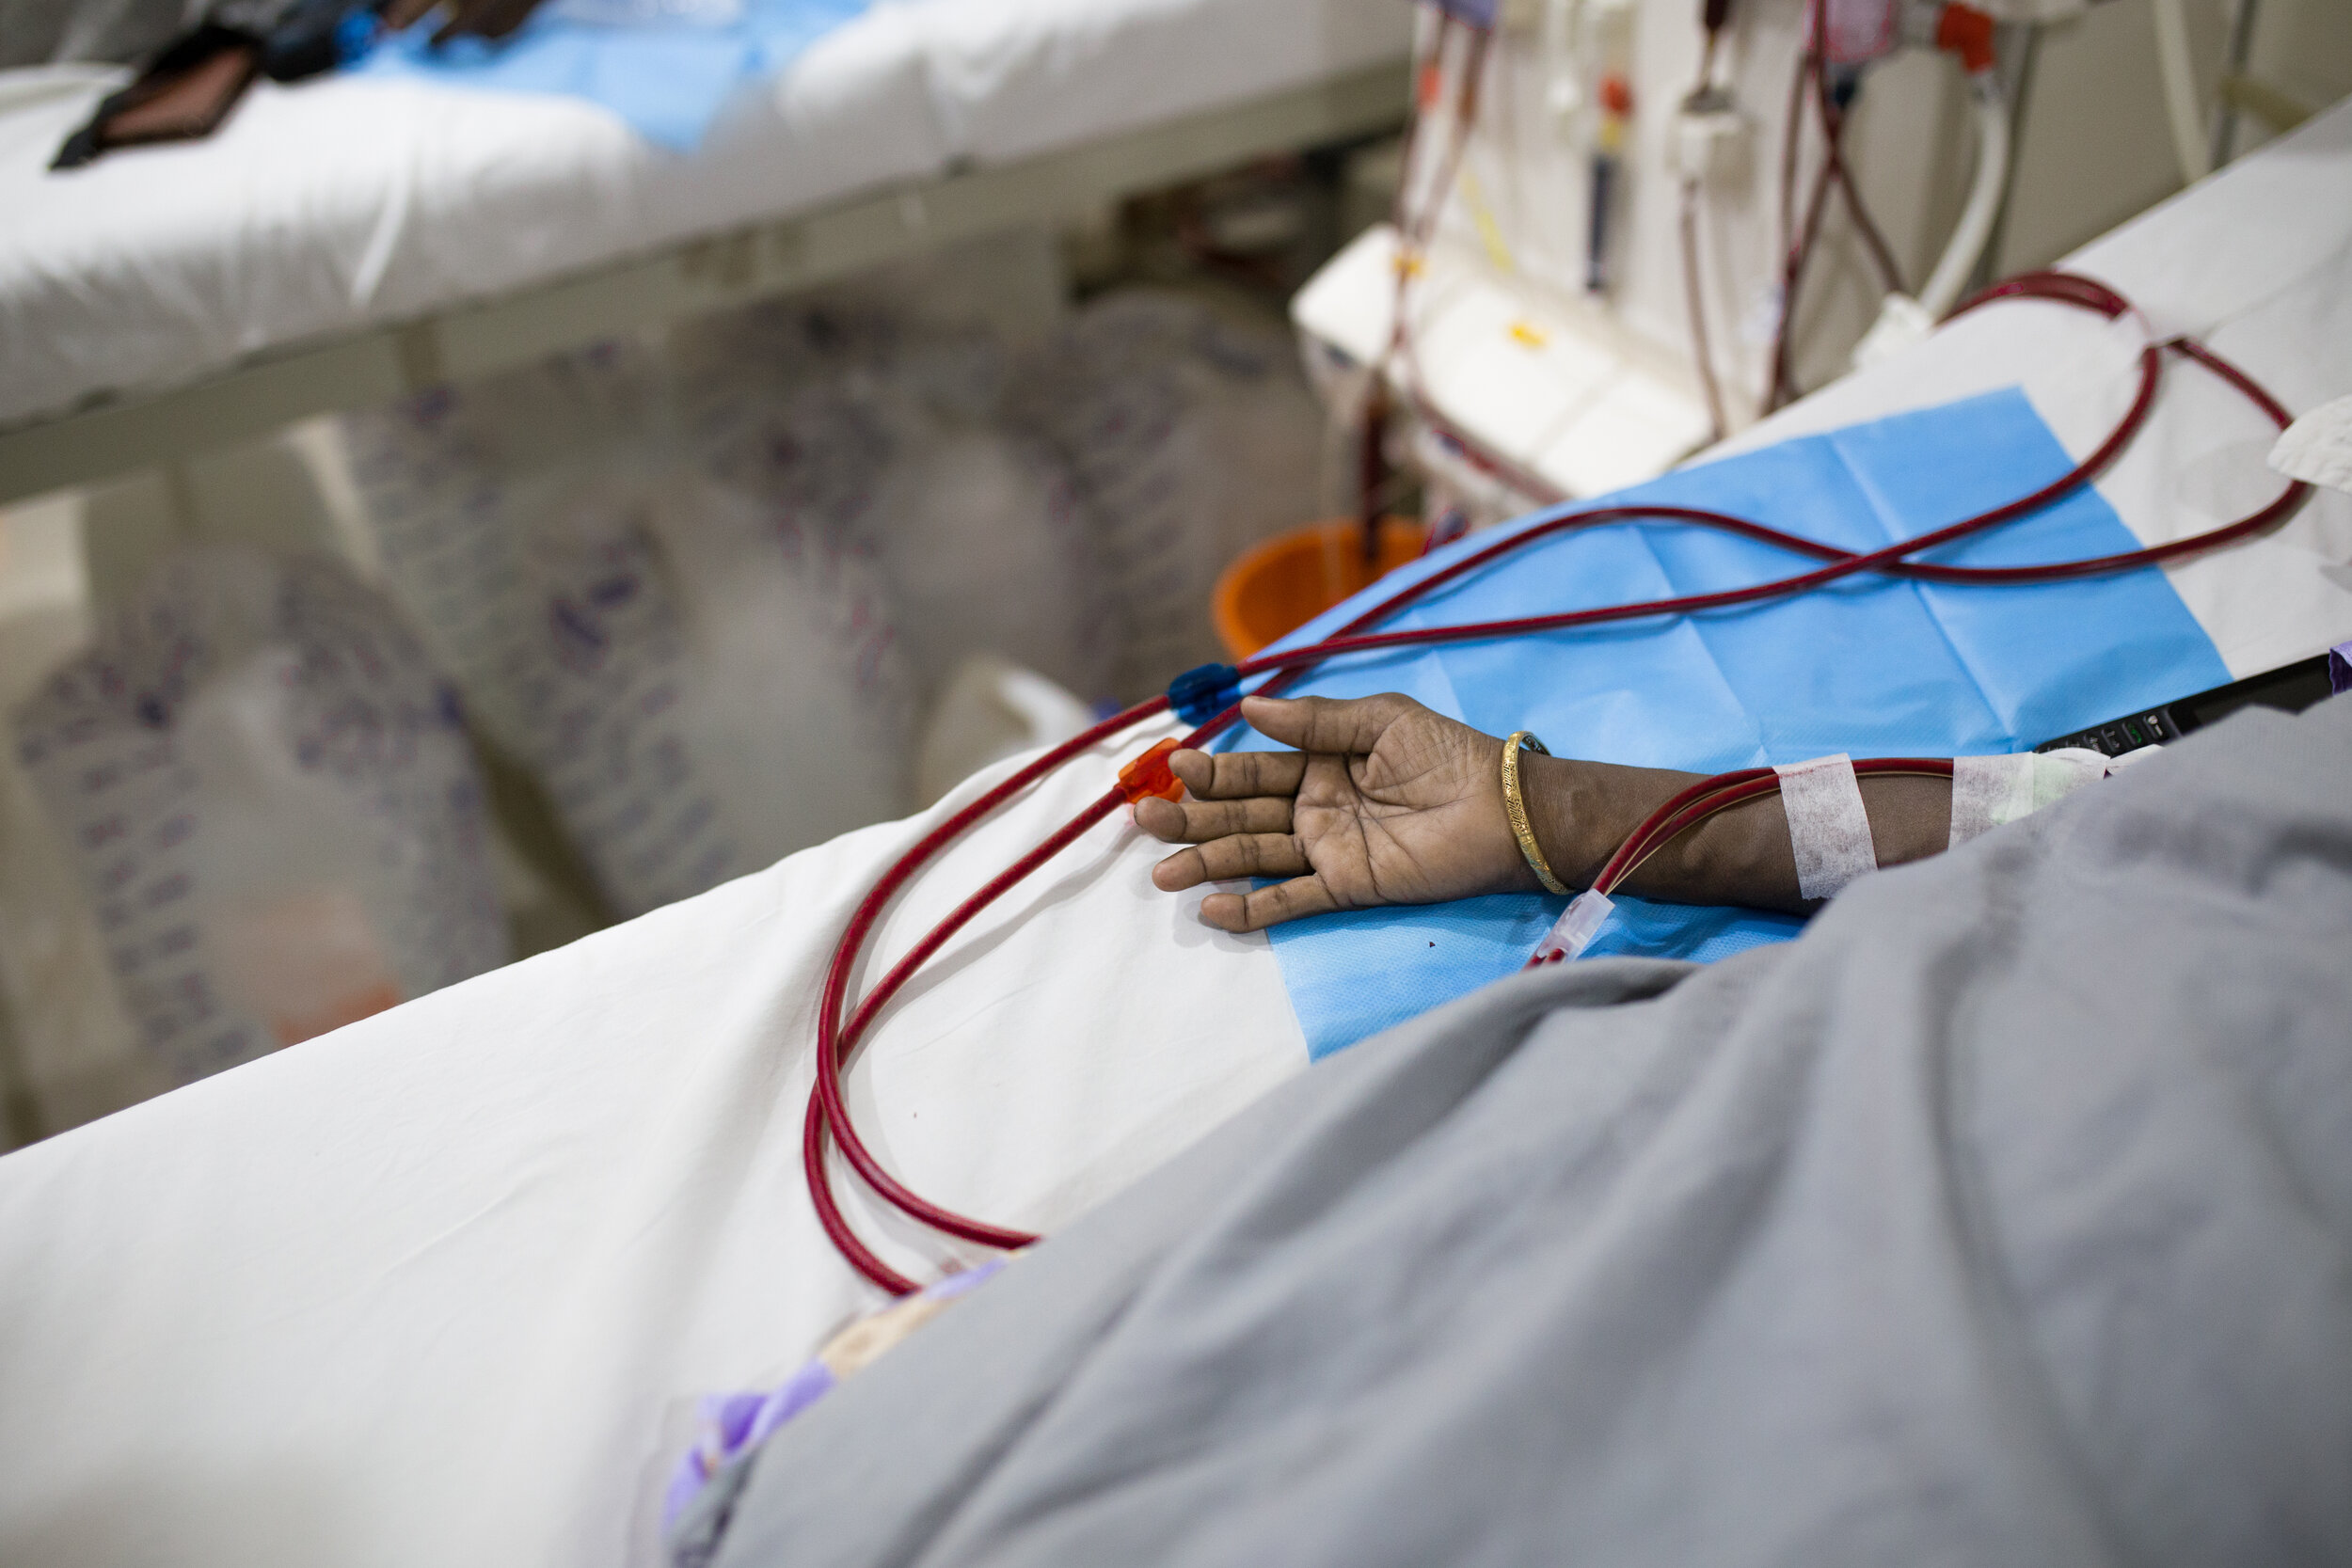  Rani undergoes dialysis at a center in Chennai, India 